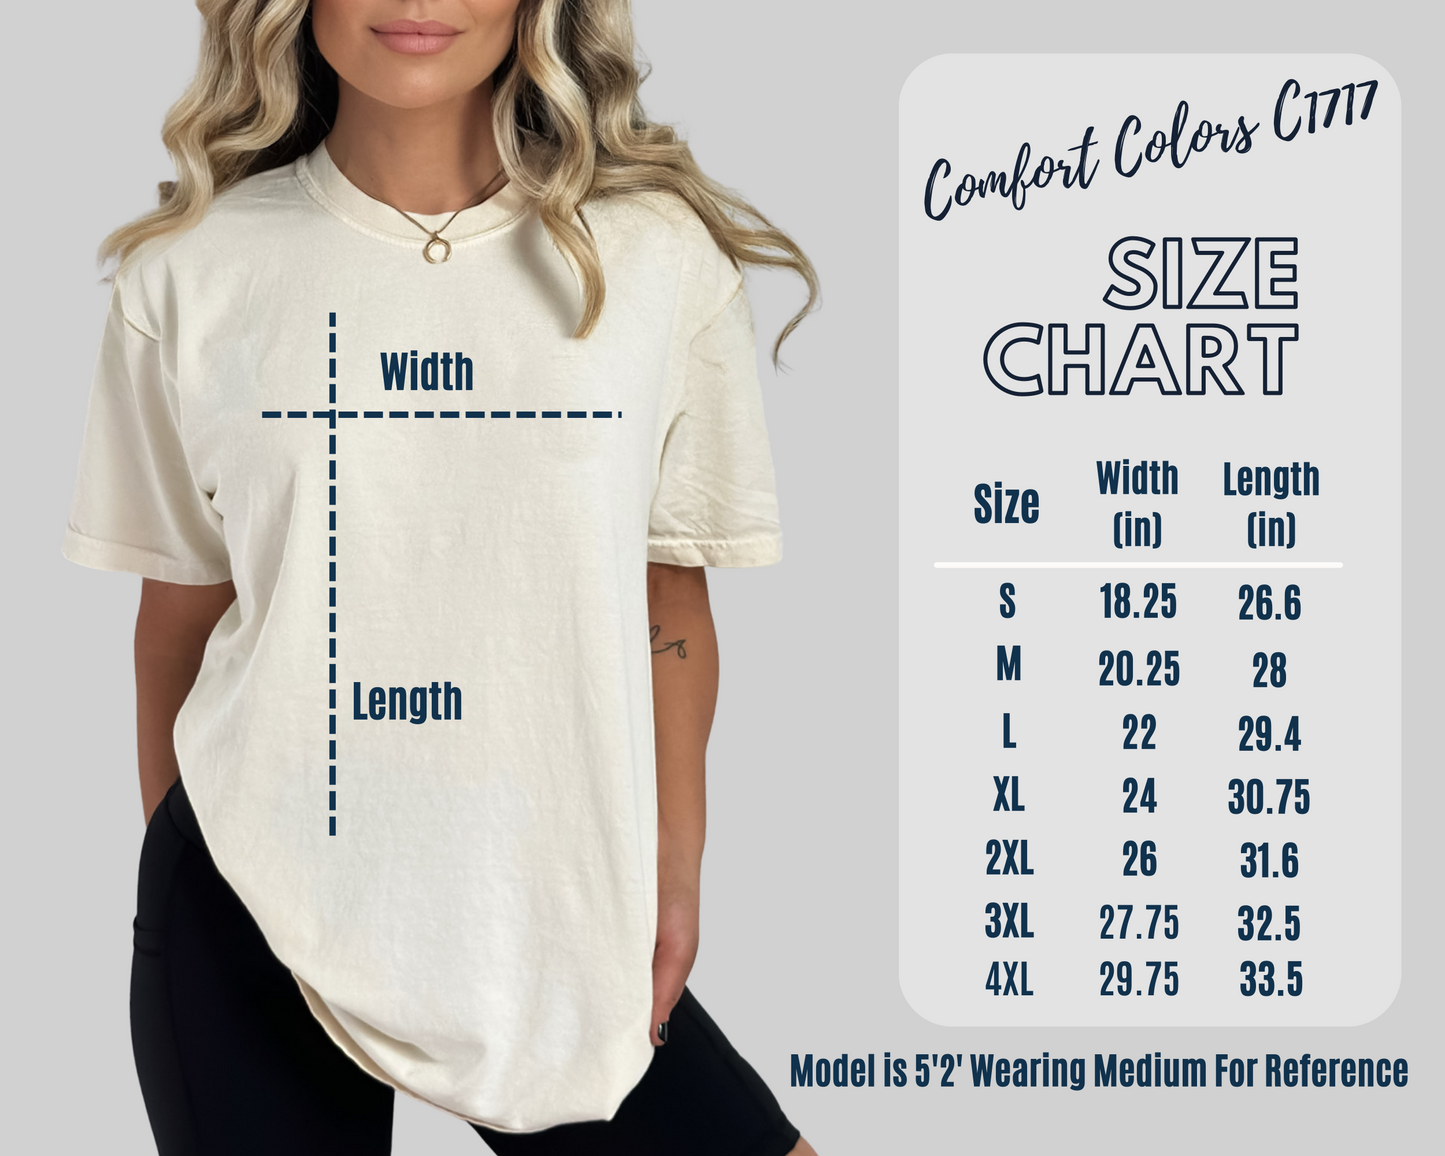 Comfort colors t-shirt 1717 size chart